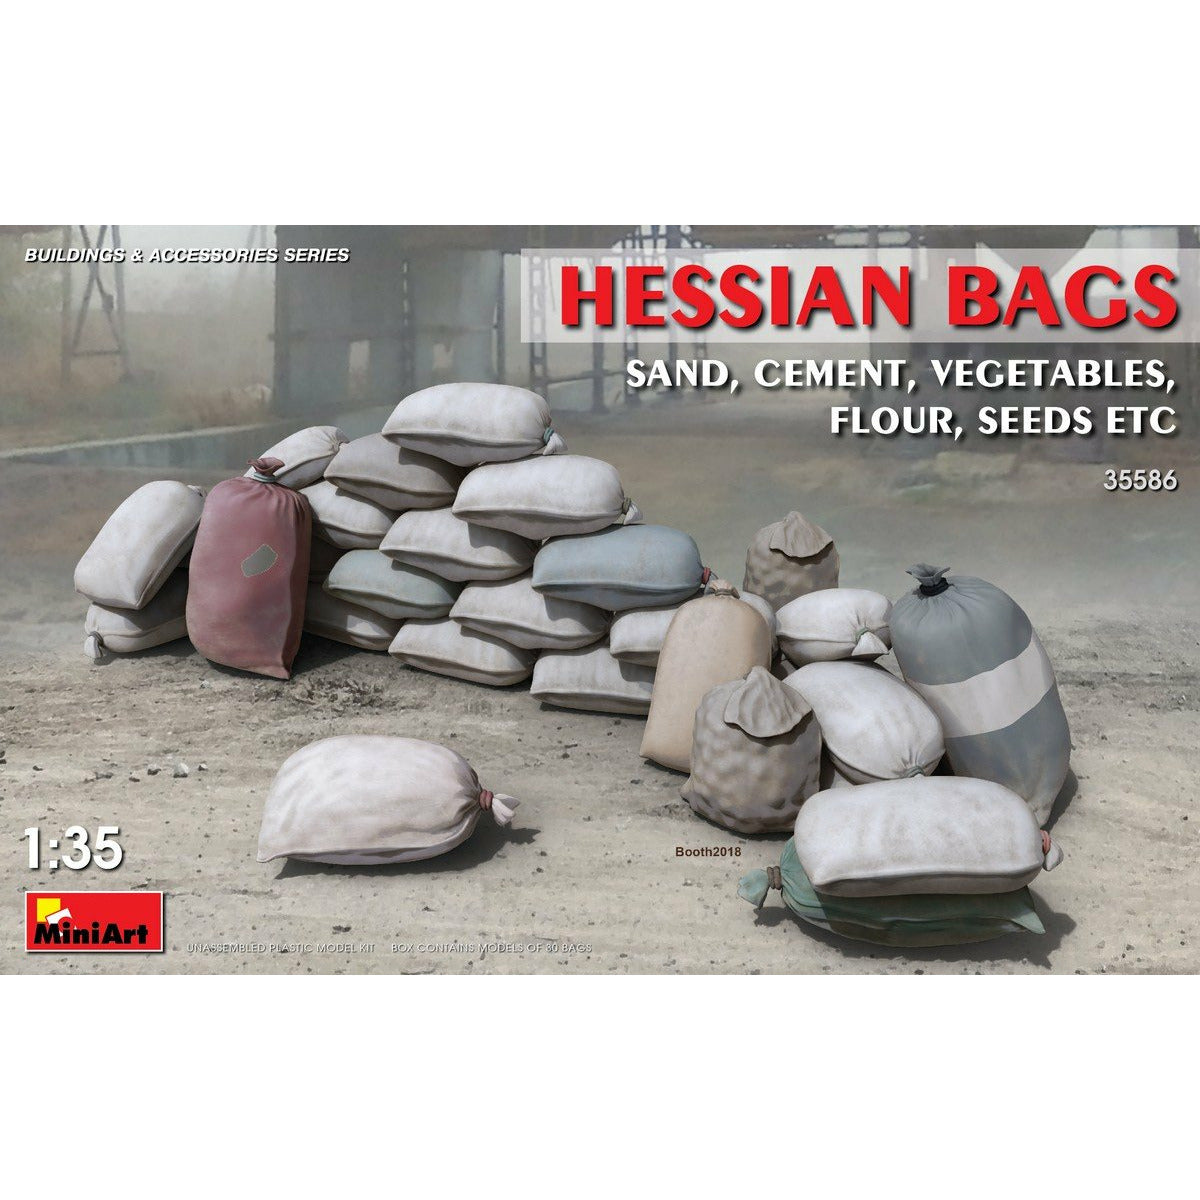 Hessian Bags (Sand, Cement, Vegetables, Flour, Seeds etc) #35586 1/35 Detail Kit by MiniArt